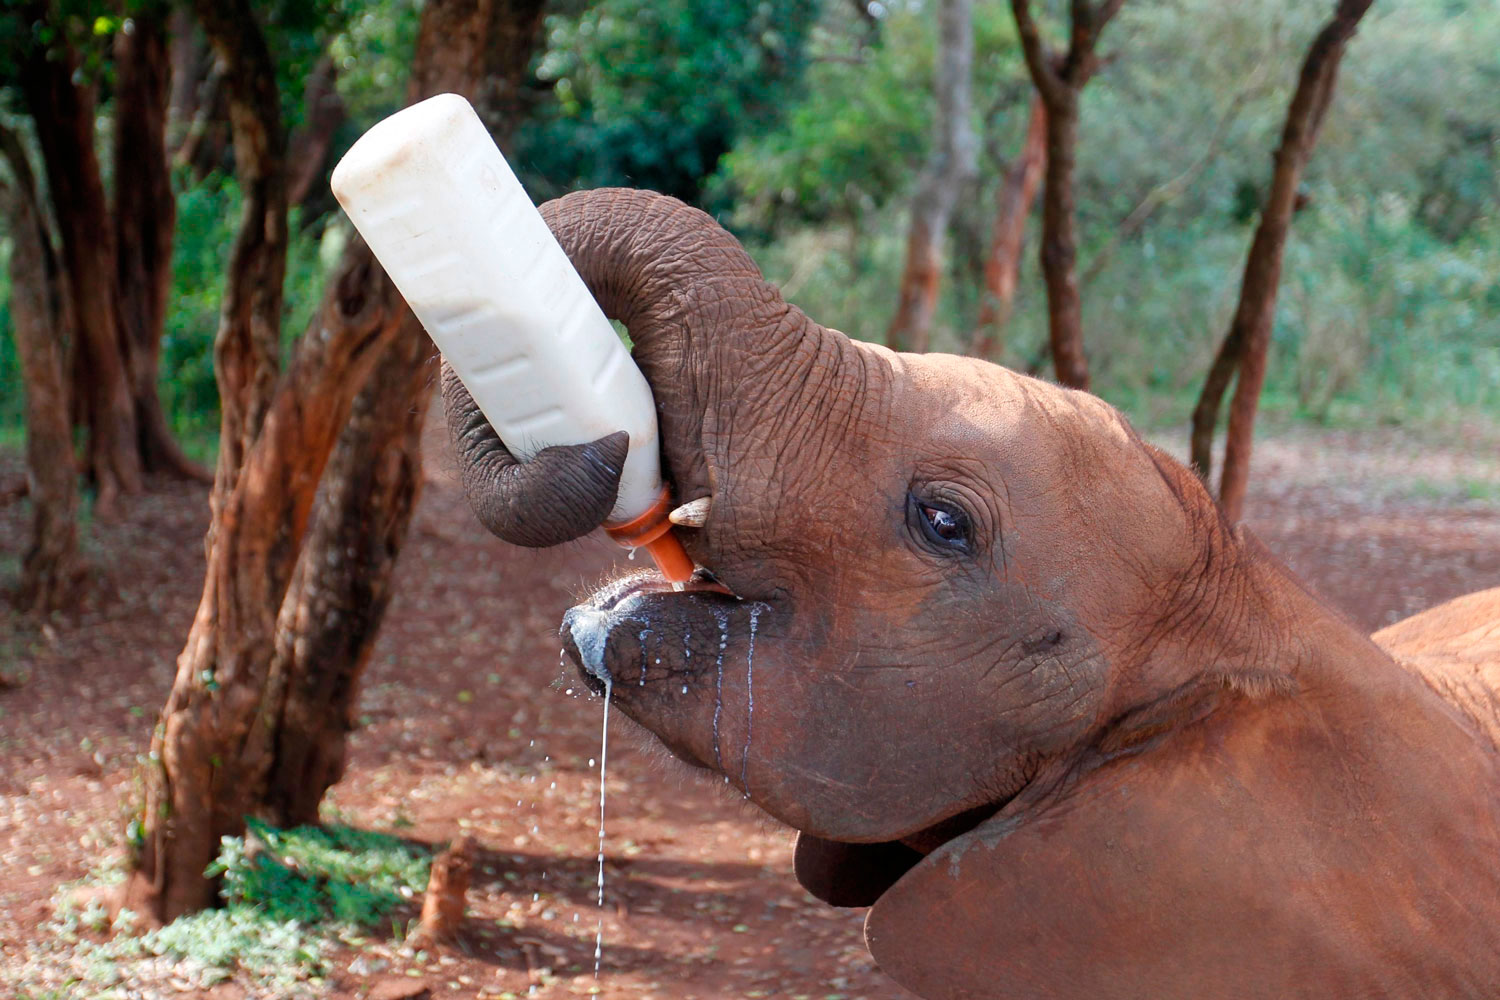 Daphne Sheldrick ayuda a los elefantes huérfanos de Kenia